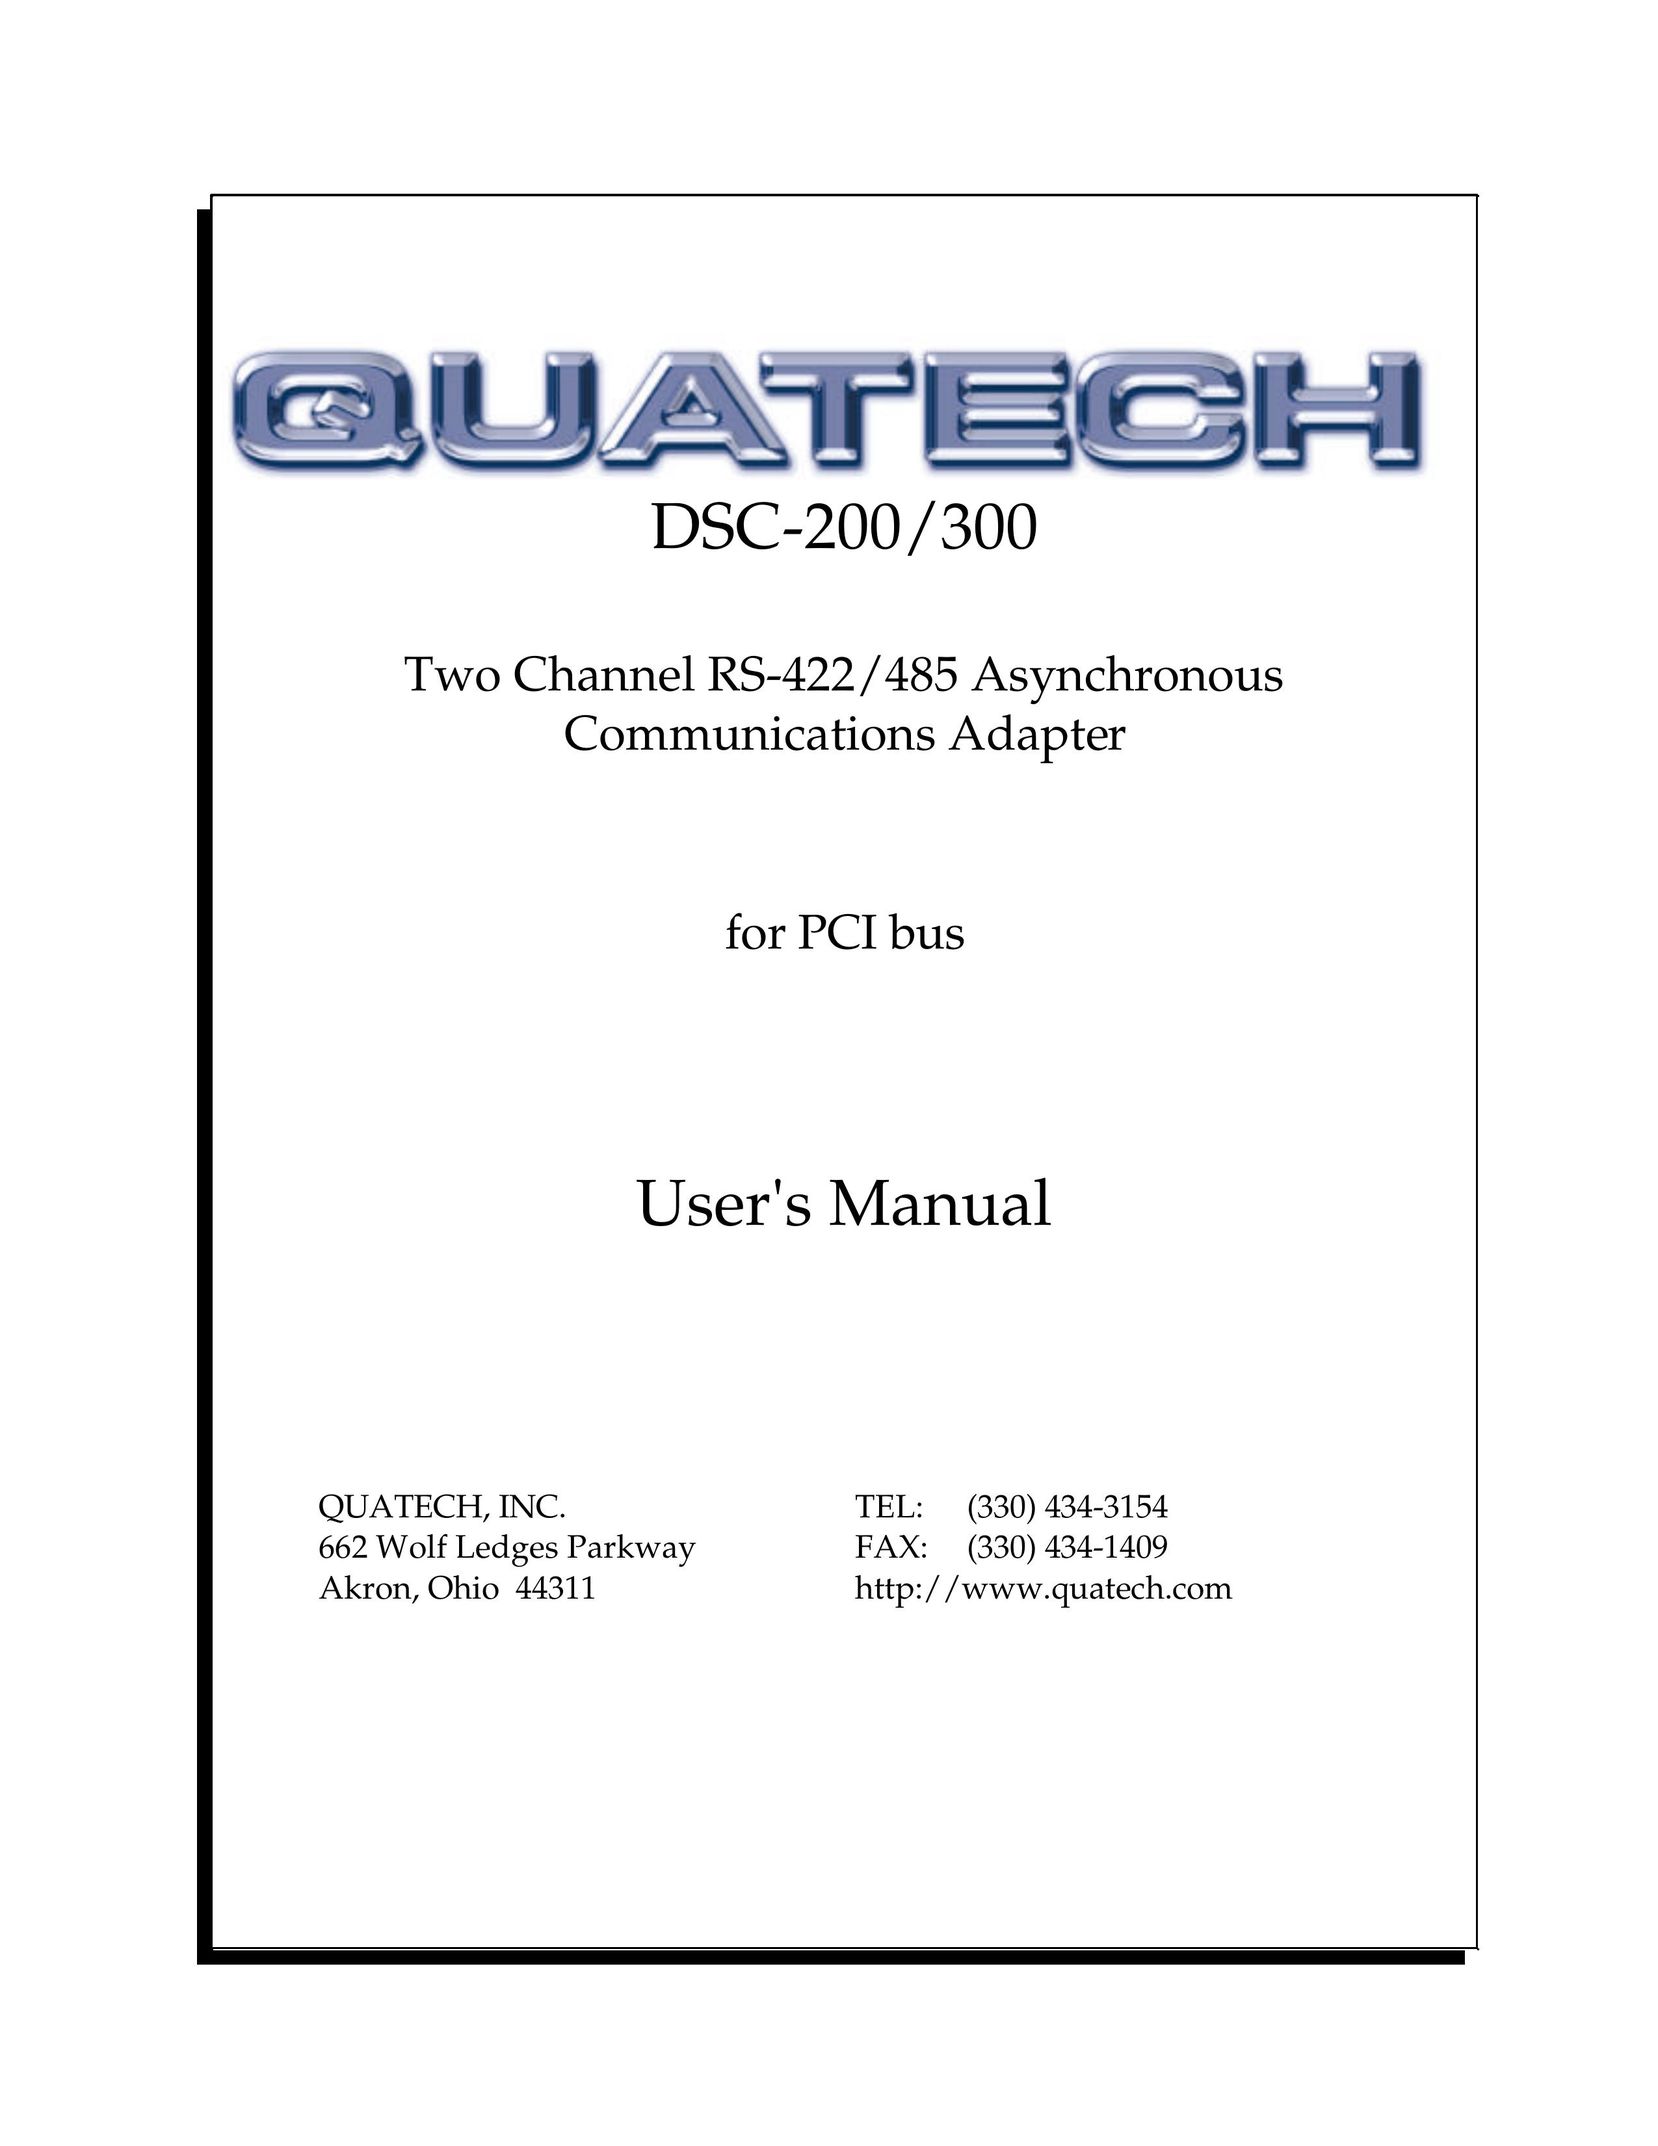 Quatech DSC-200 Network Card User Manual